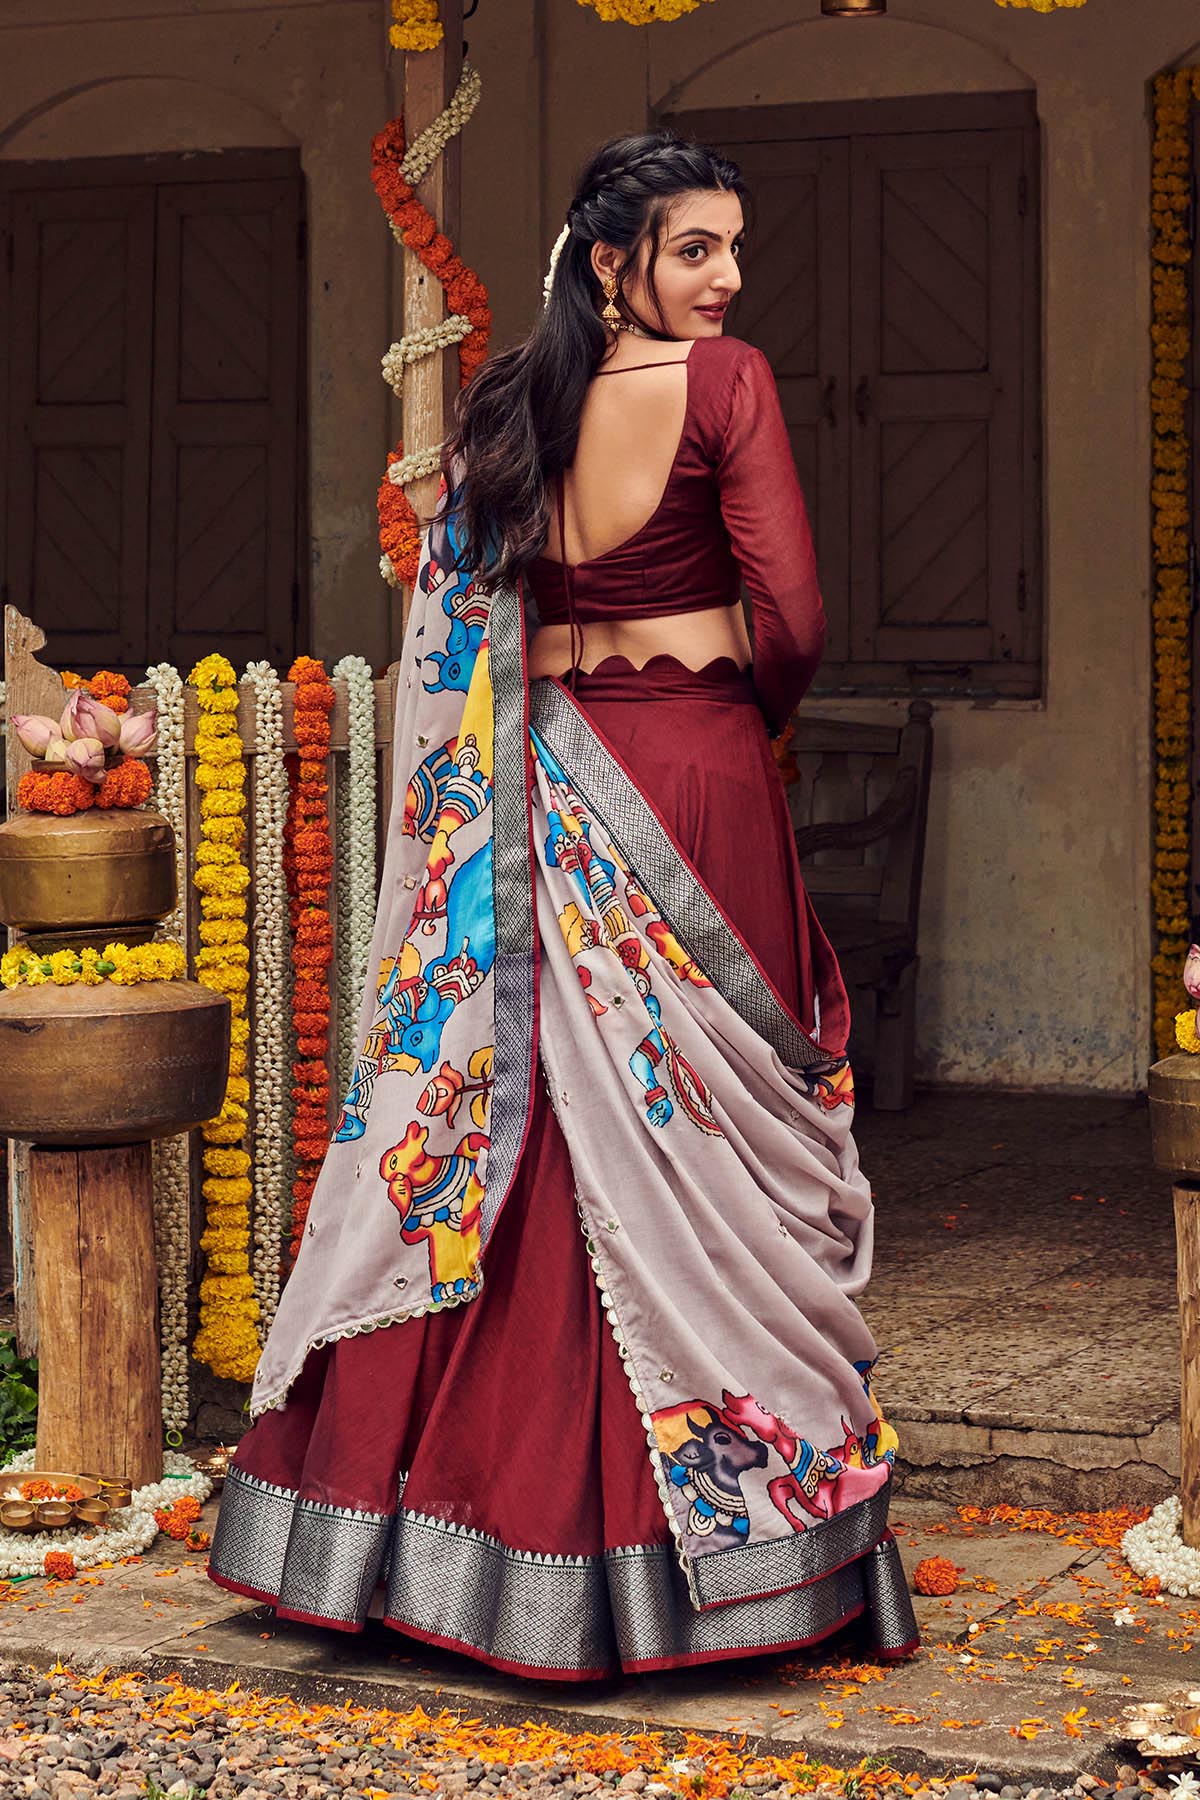 Buy Women's Cotton Semi-Stitched Lehenga Choli Design Evening Dress (Free  Size) at Amazon.in